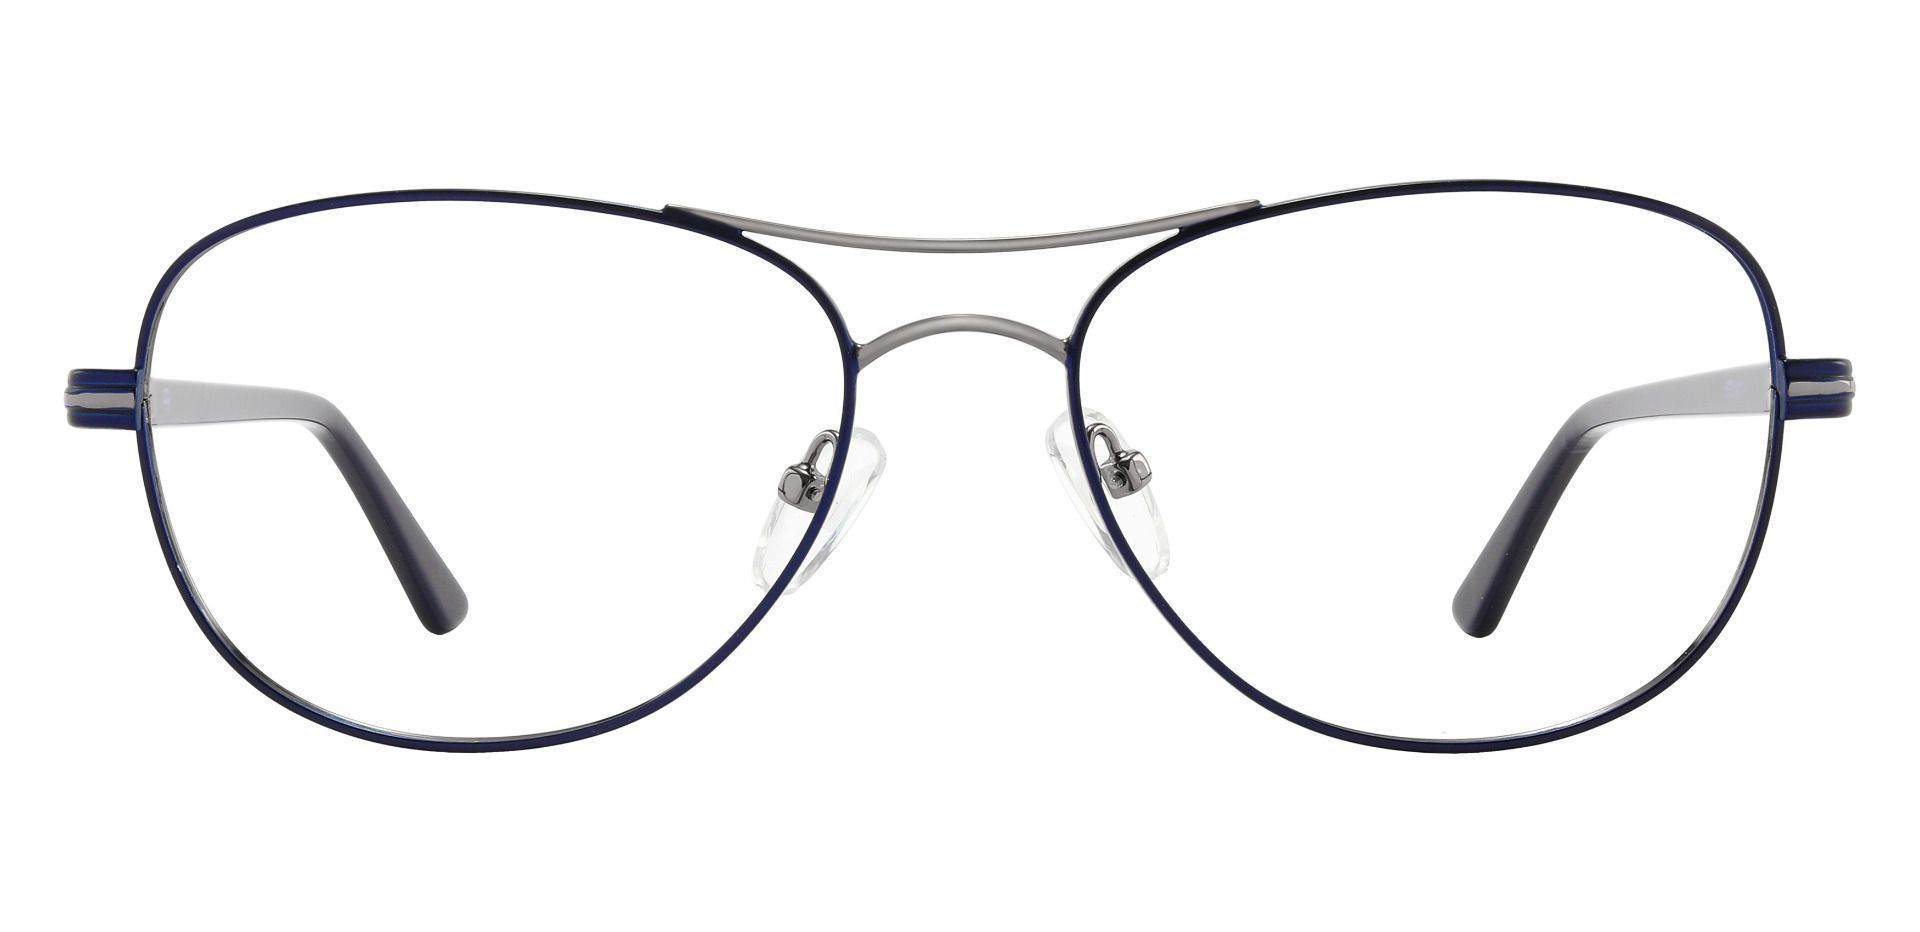 Reeves Aviator Progressive Glasses - Blue